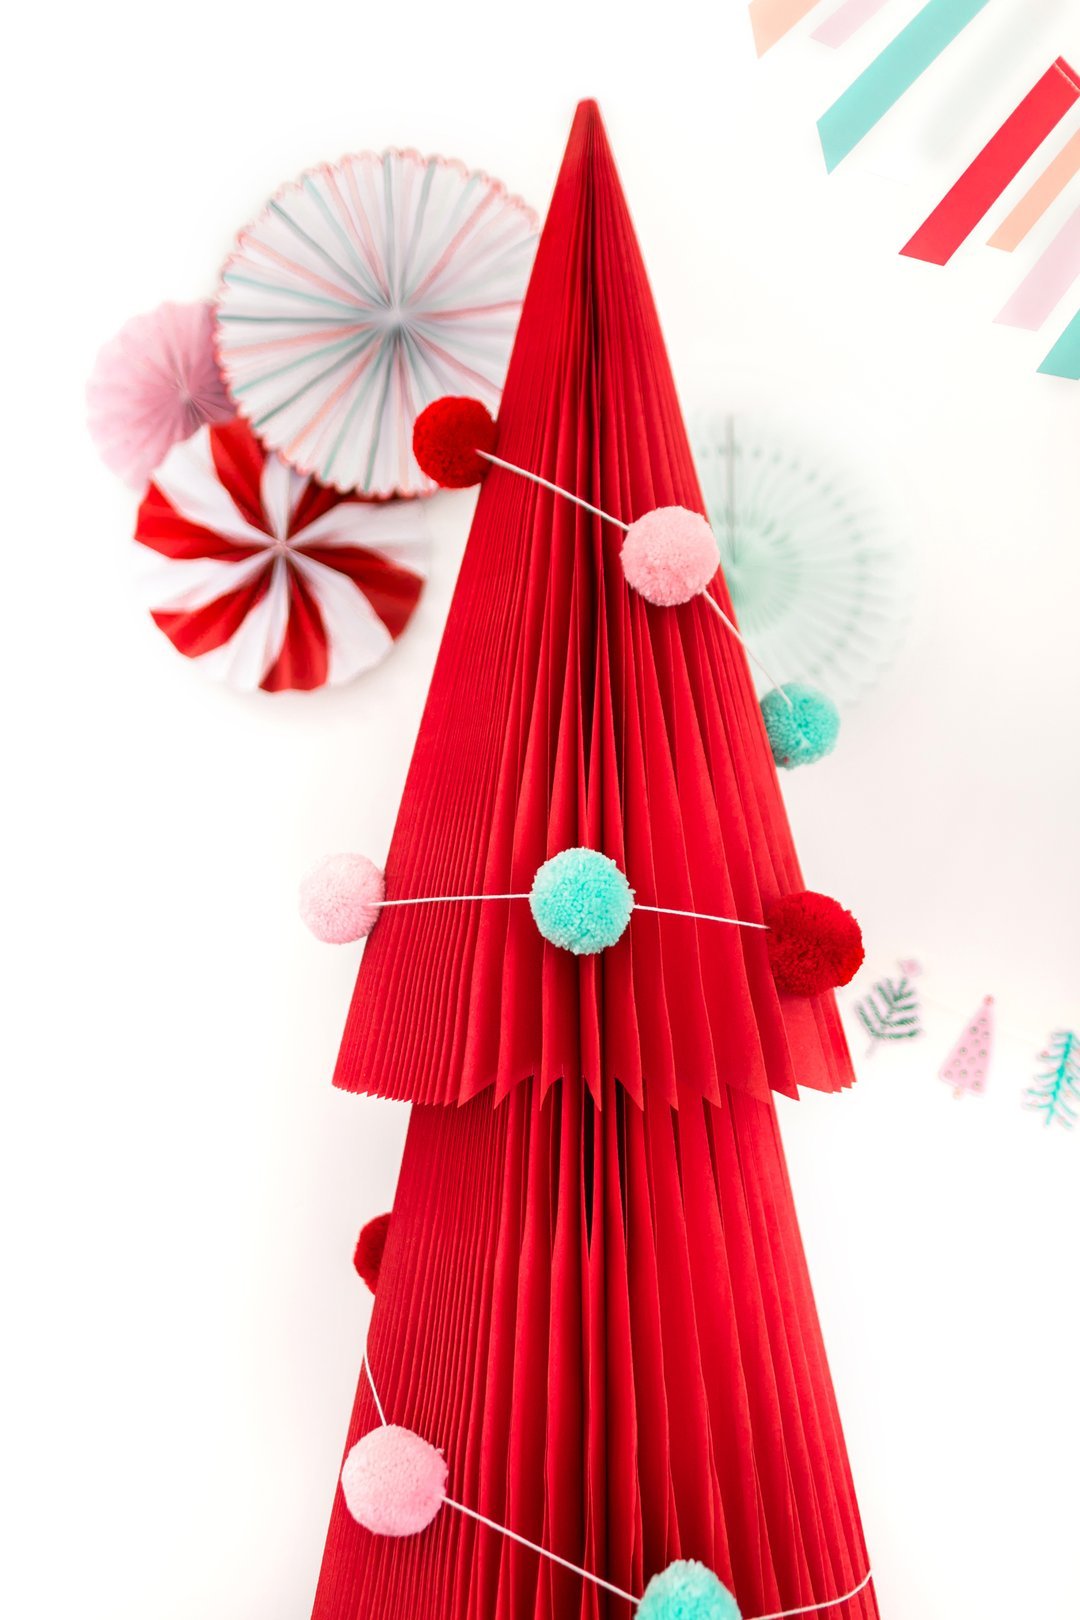 Festive holiday pom pom garland wrapped around a red paper Christmas tree decoration